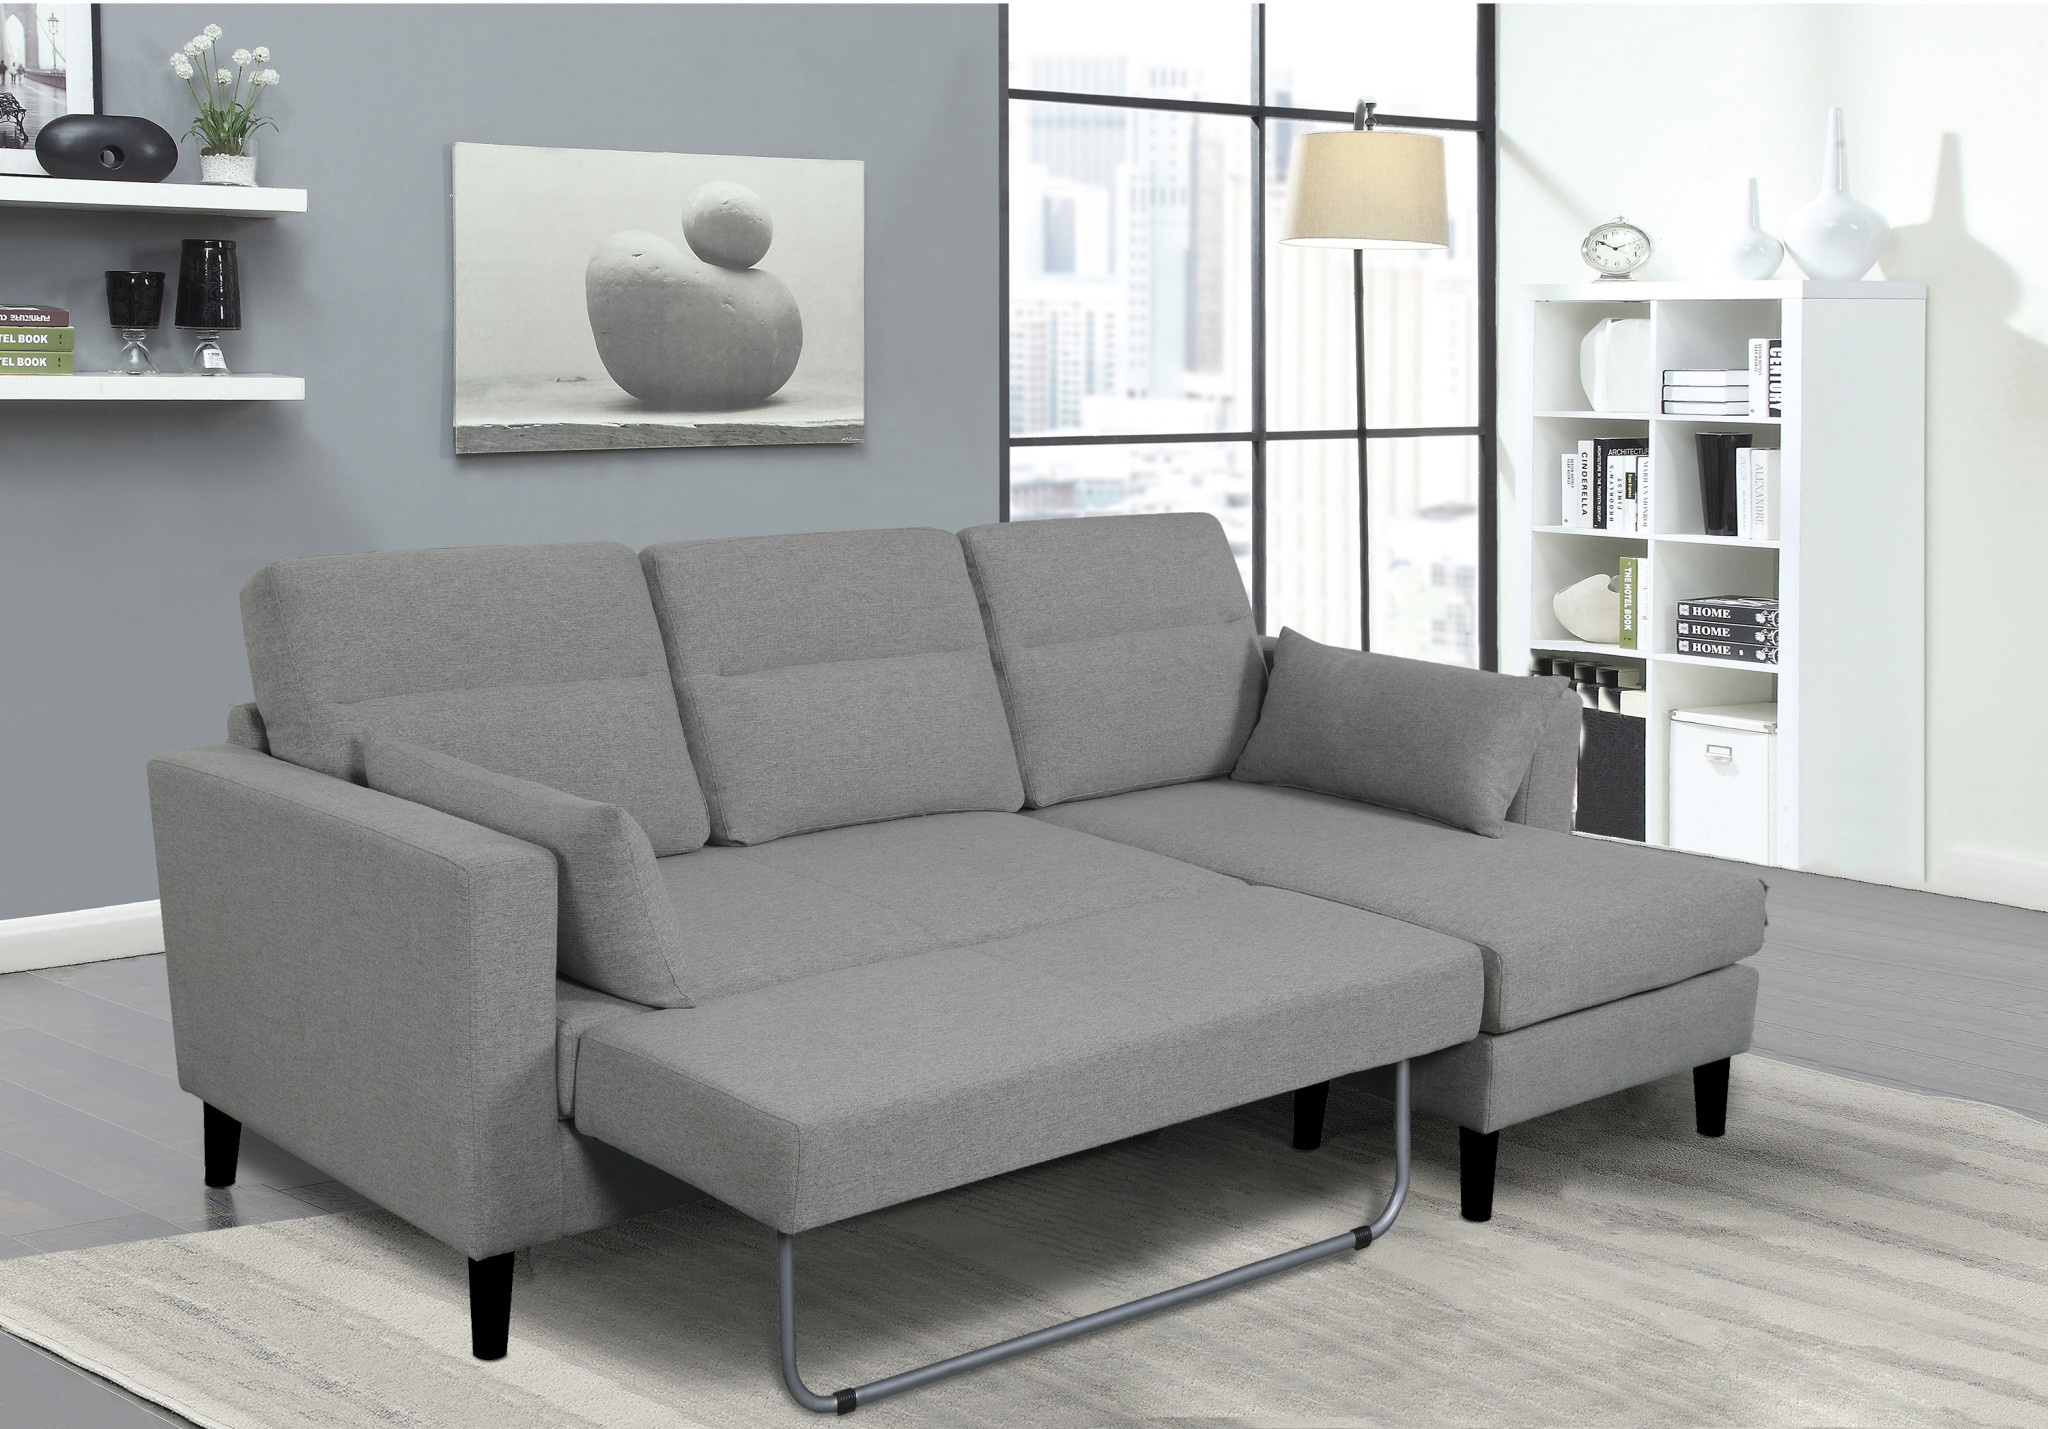 360025 sofa bed pdf